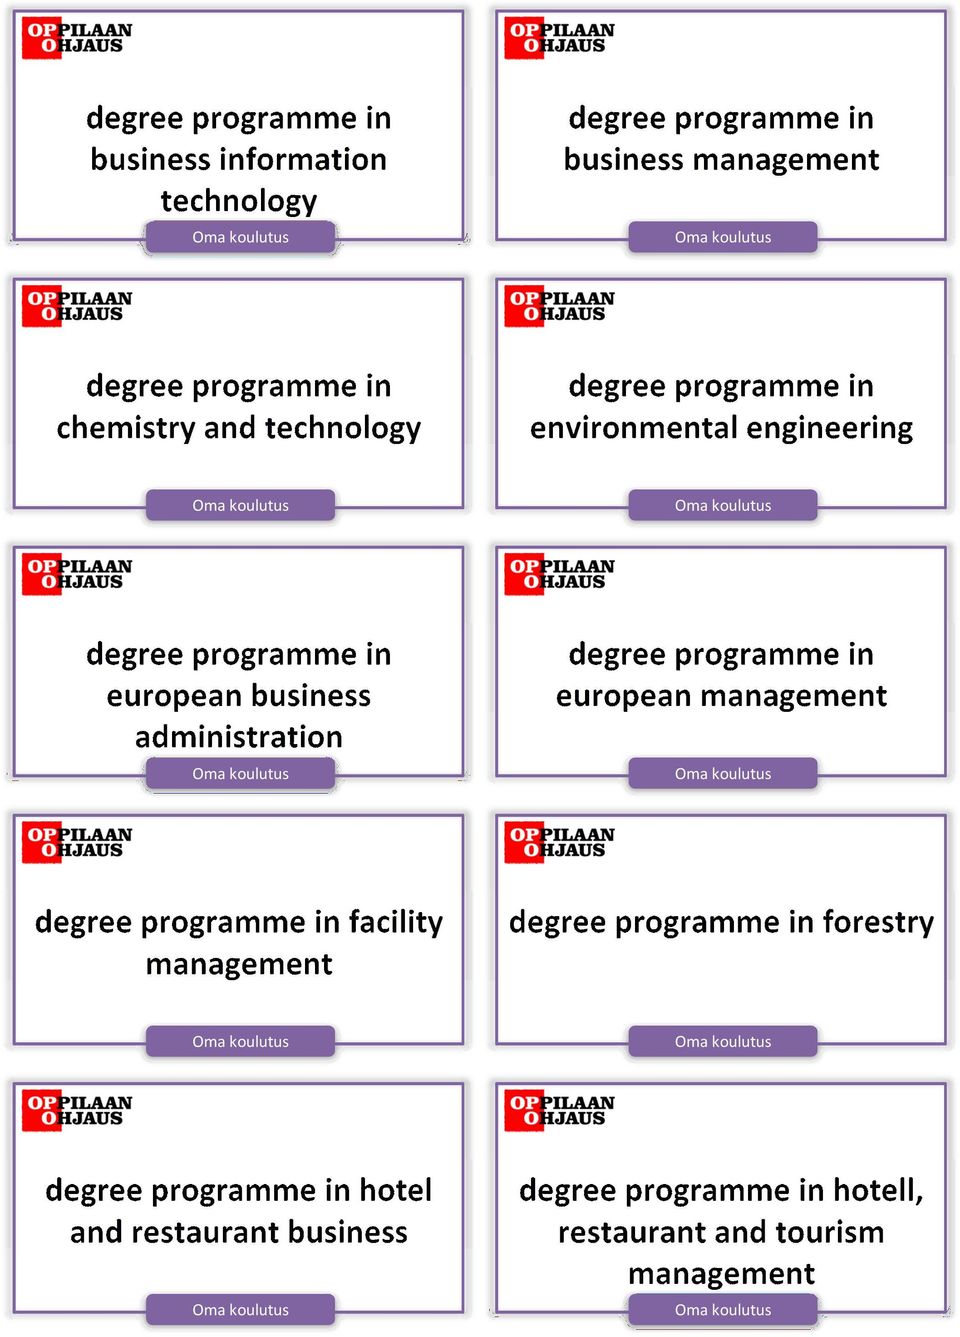 administration degree programme in european management degree programme in facility management degree programme